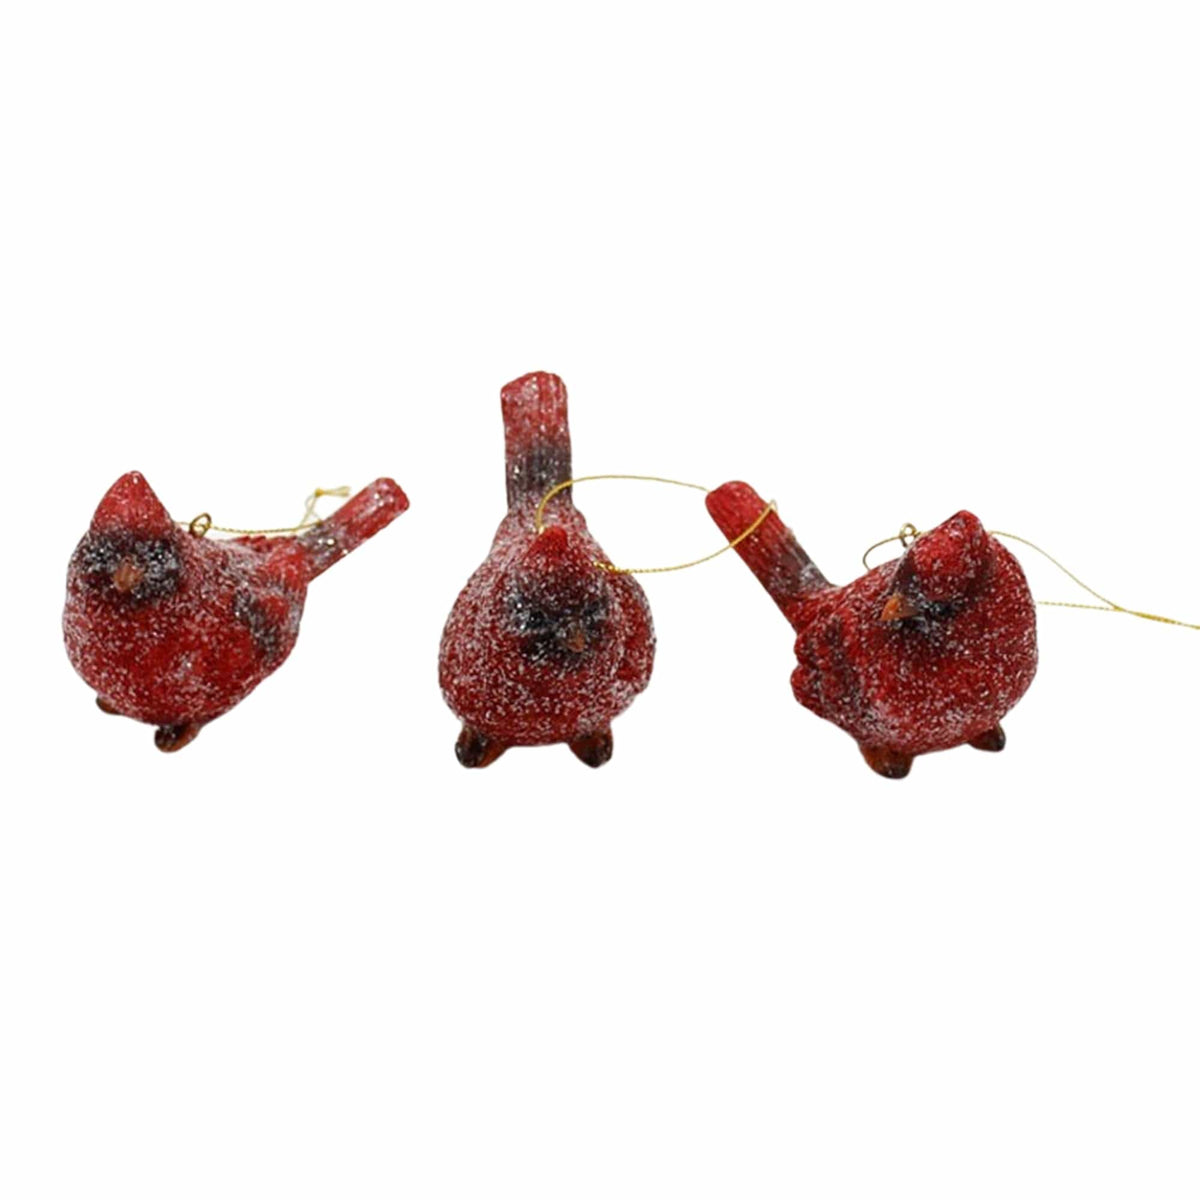 Resin Cardinal Ornament Set of 3 - Assorted